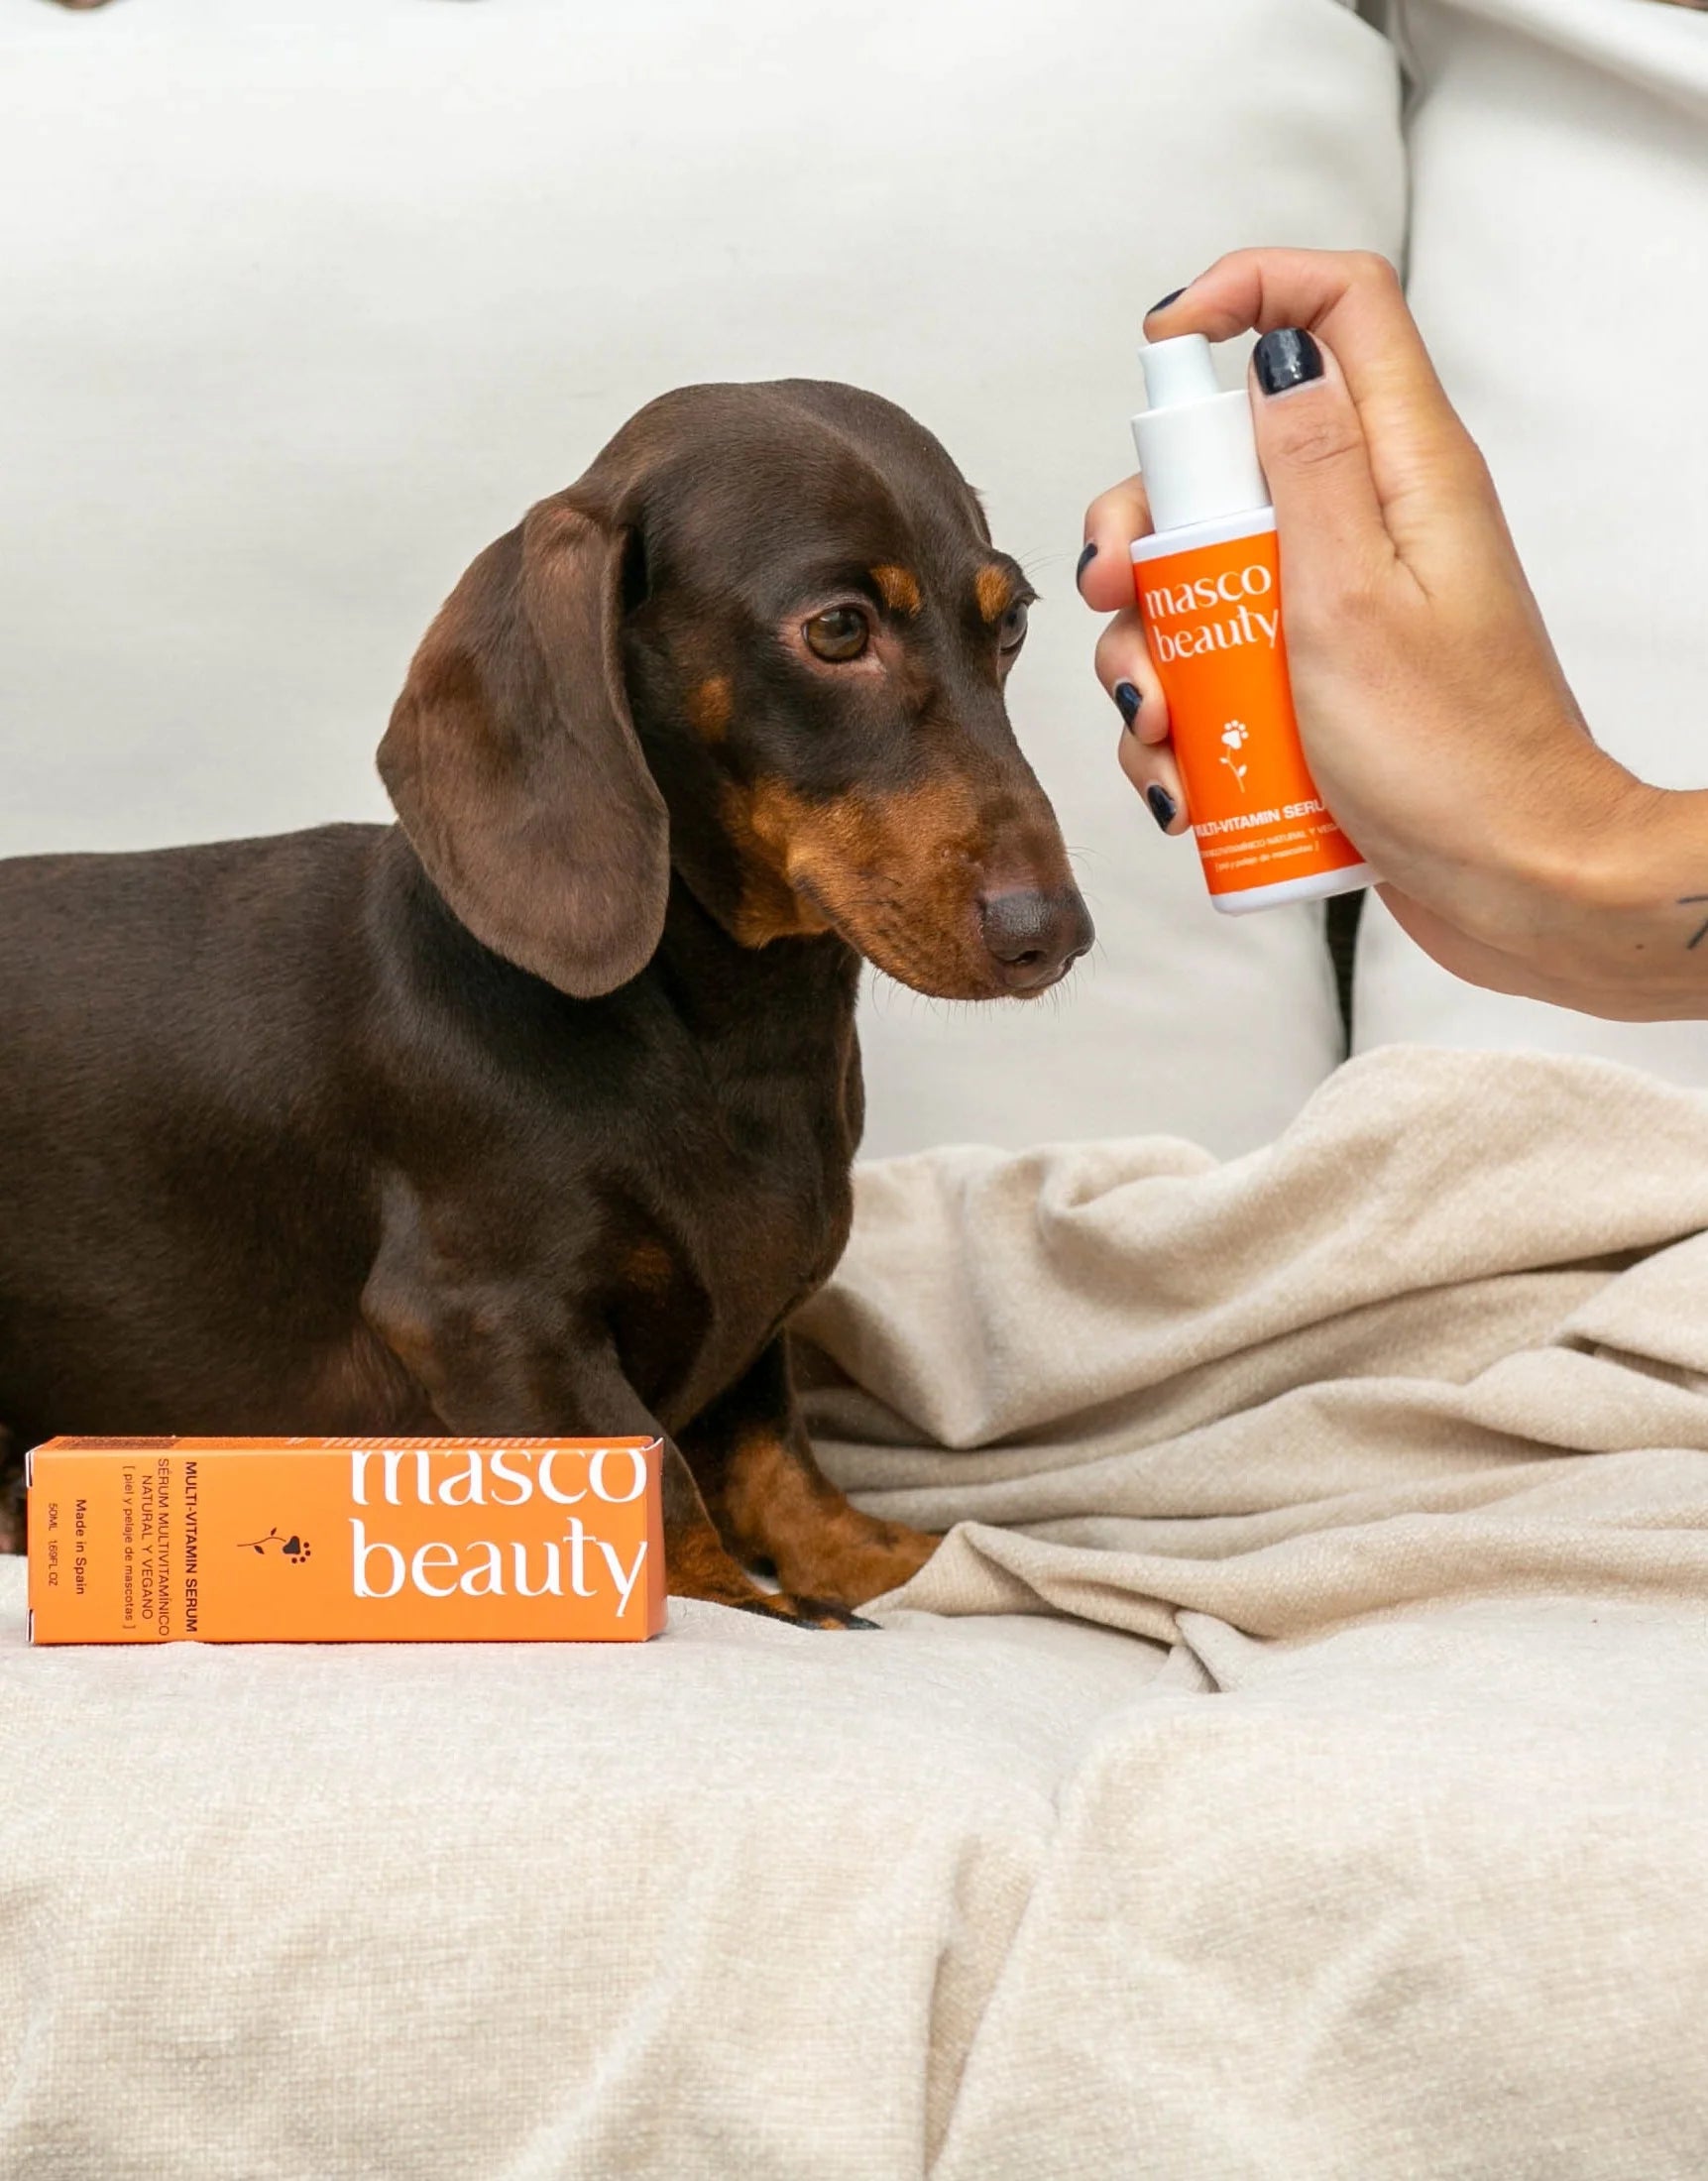 Dog getting sprayed with Masco beauty multi-vitamin serum